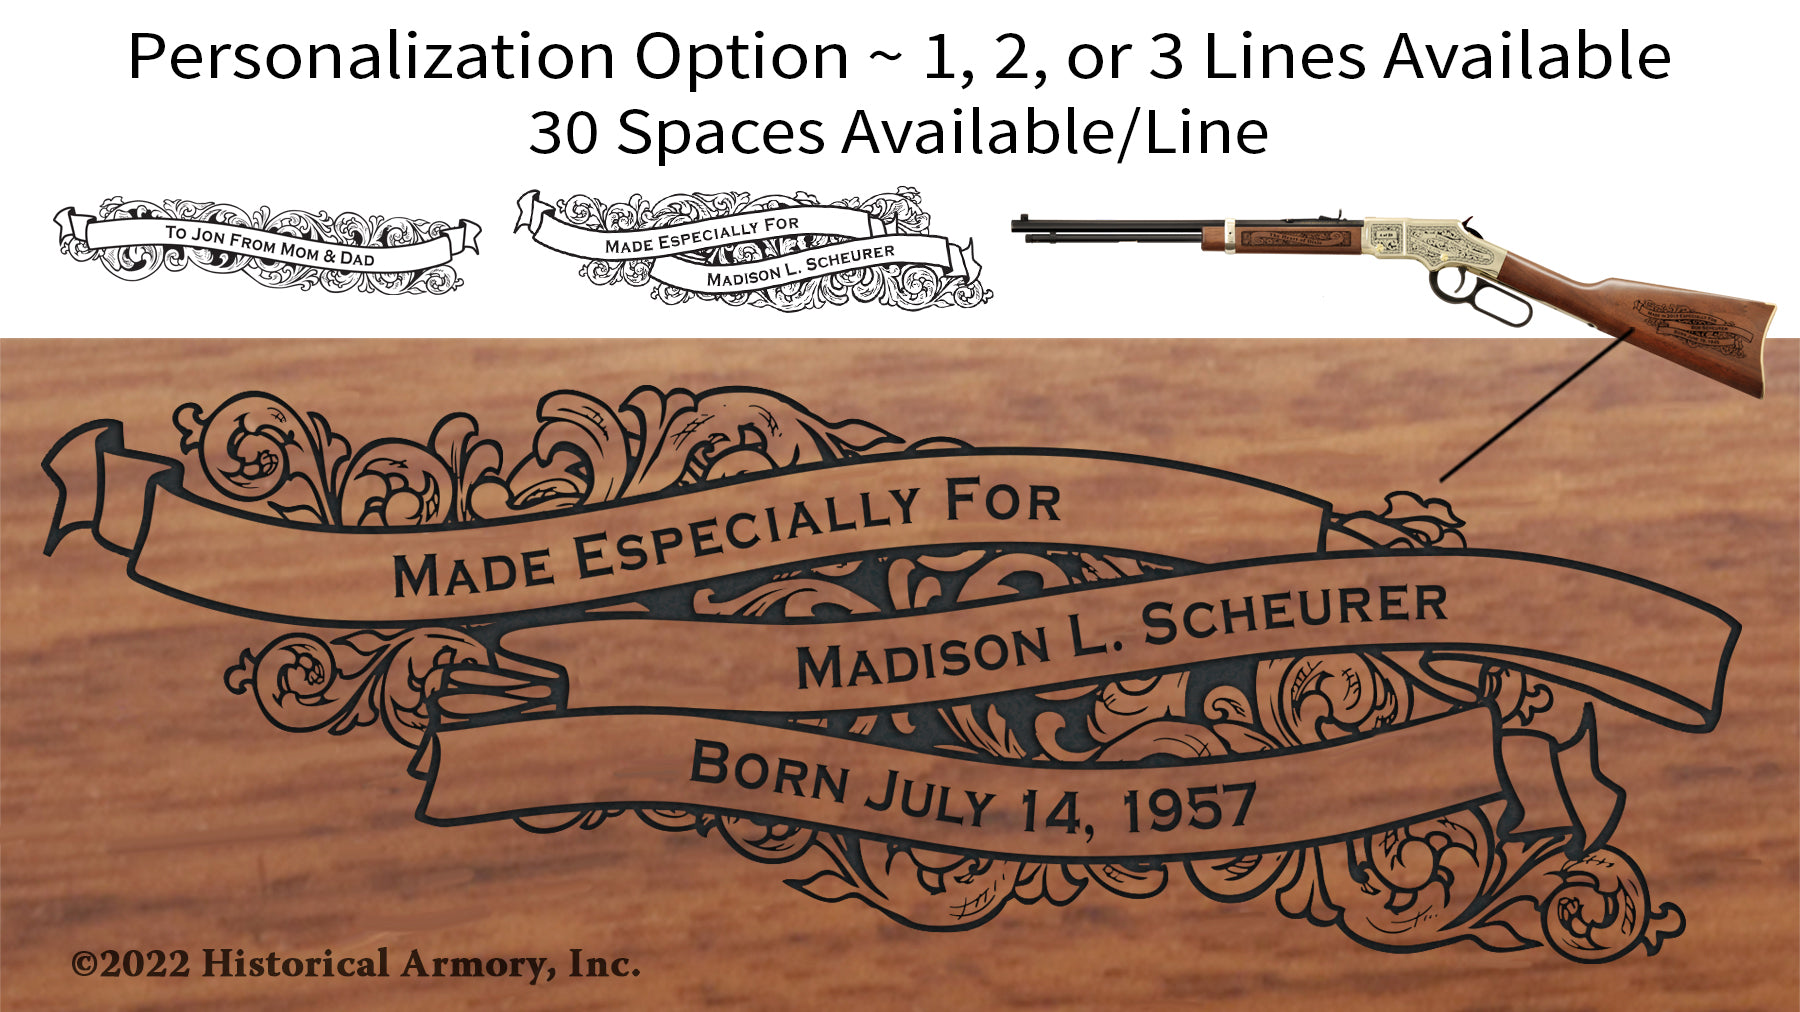 Nez Perce County Idaho Engraved Rifle Personalization